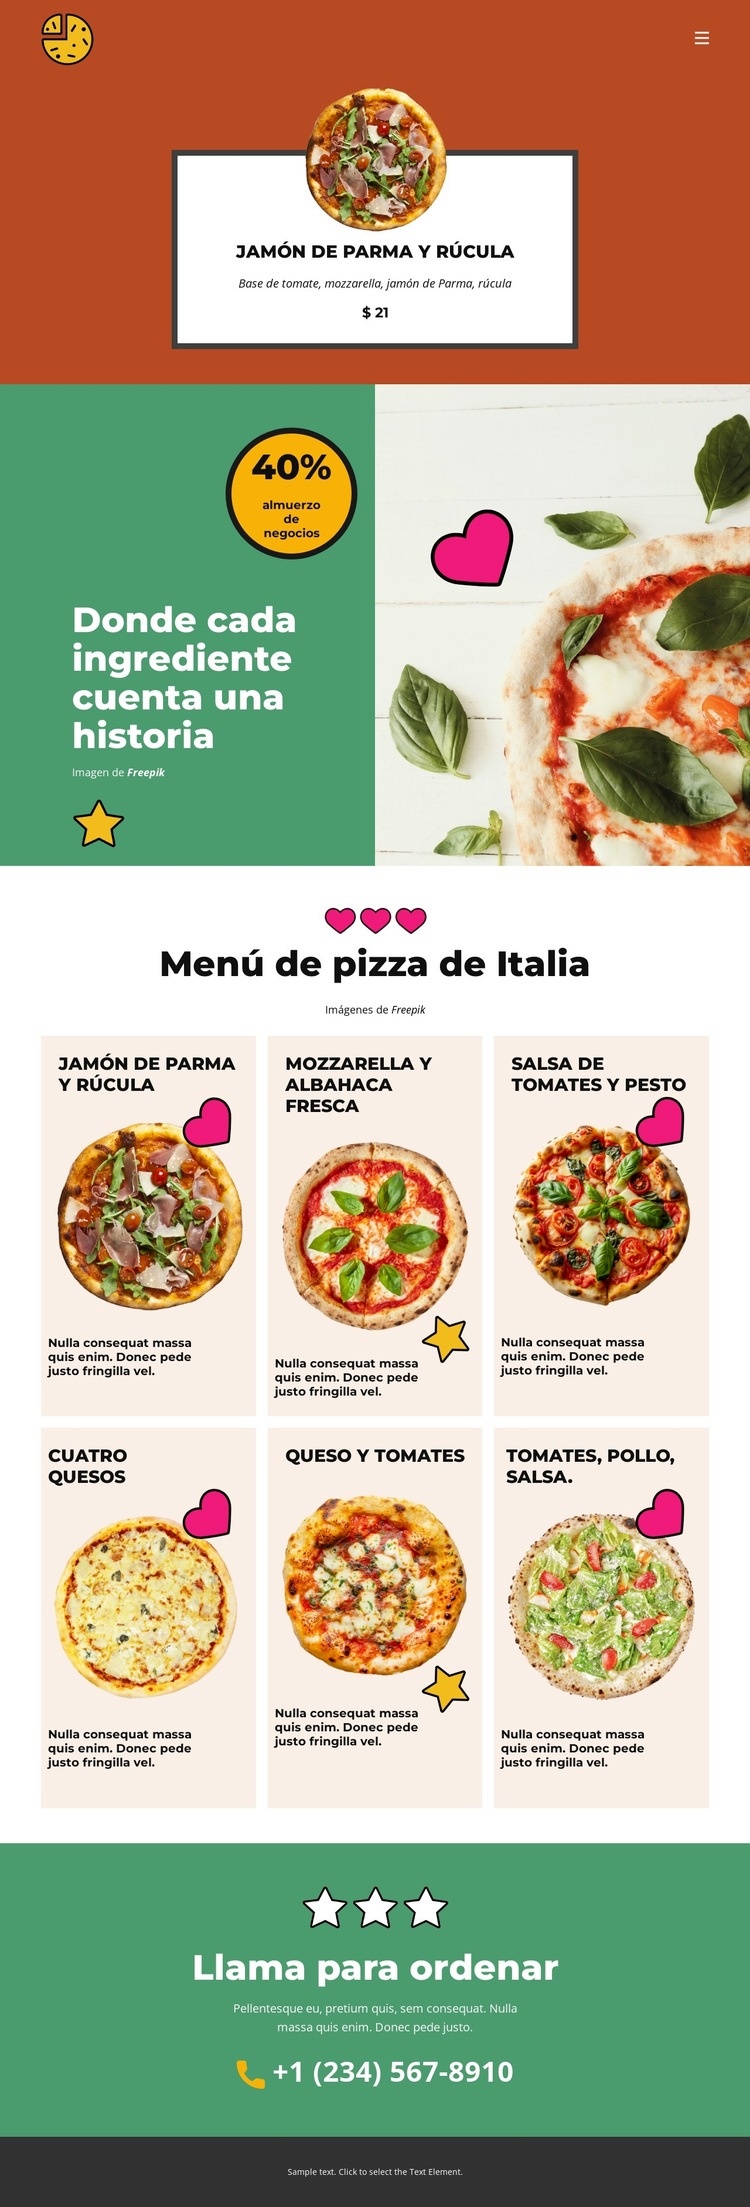 Fun Facts about Pizza Plantilla